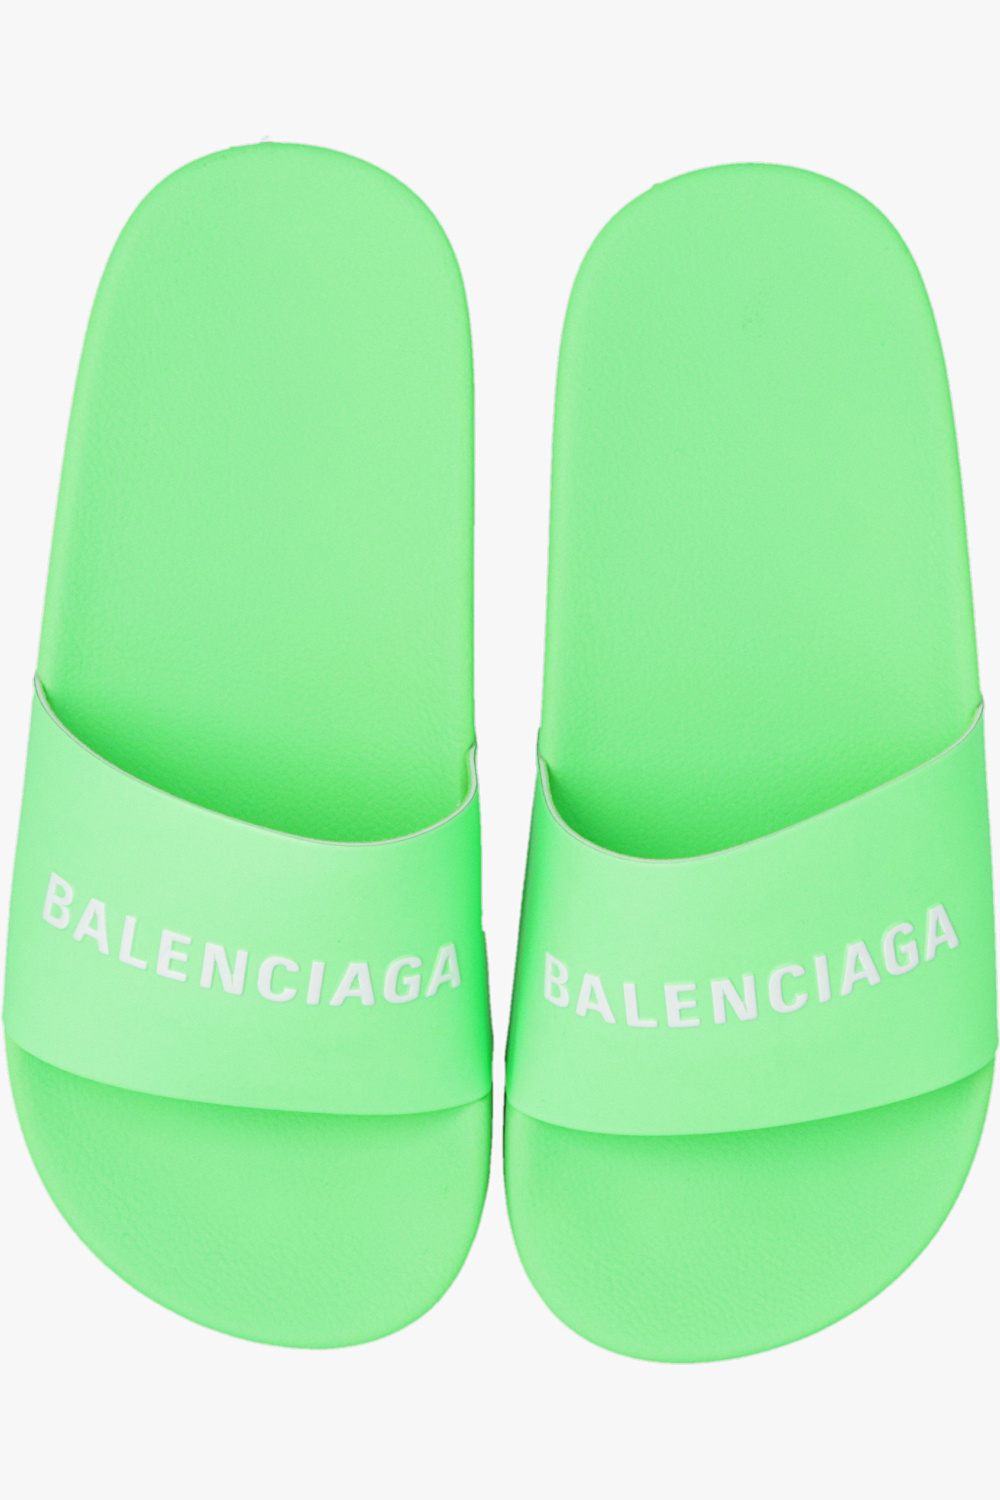 Balenciaga Kids katy perry crazy shoes dallas style jeremy scott heels photos